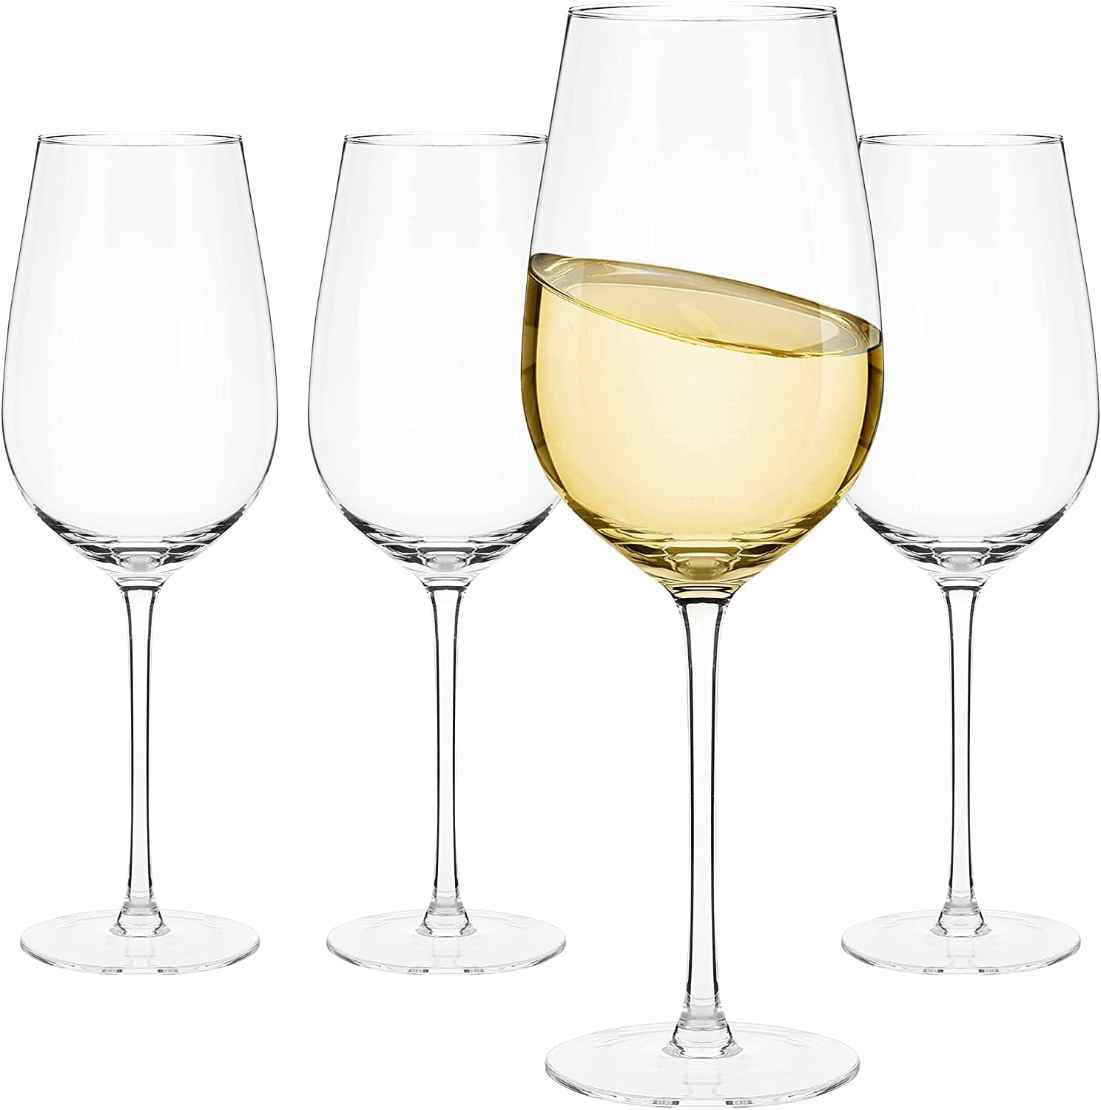 ELIXIR GLASSWARE Premium Crystal Wine Glasses 14oz x 4 - Red